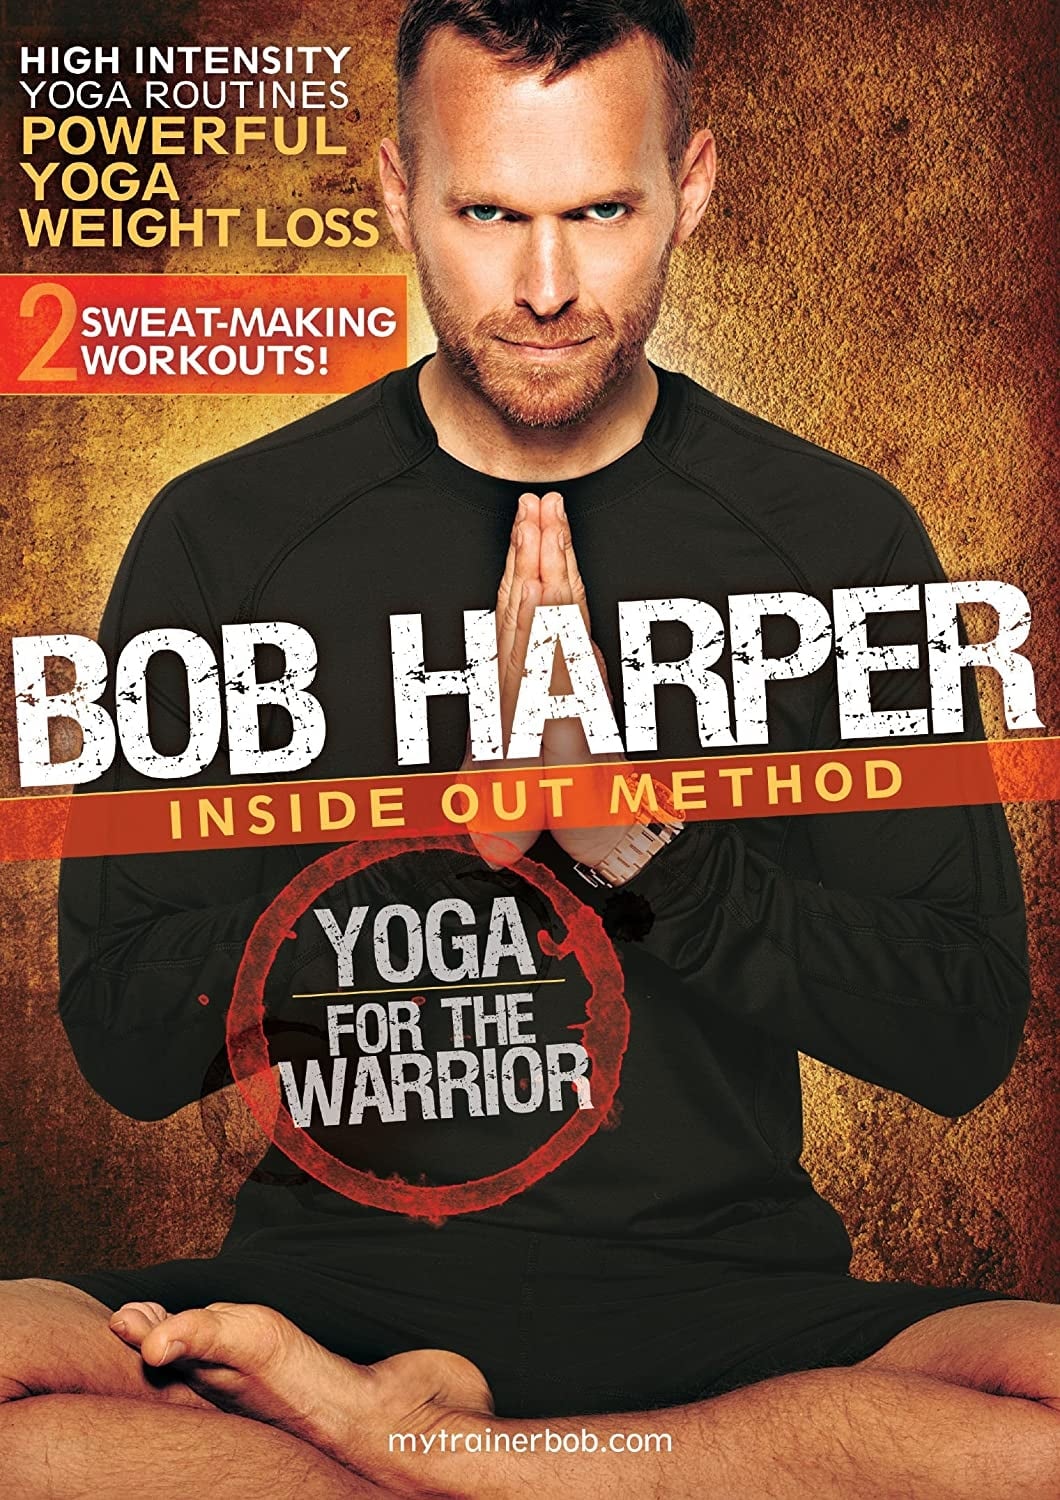 Bob Harper: Inside Out Method - Yoga for the Warrior Workout 2